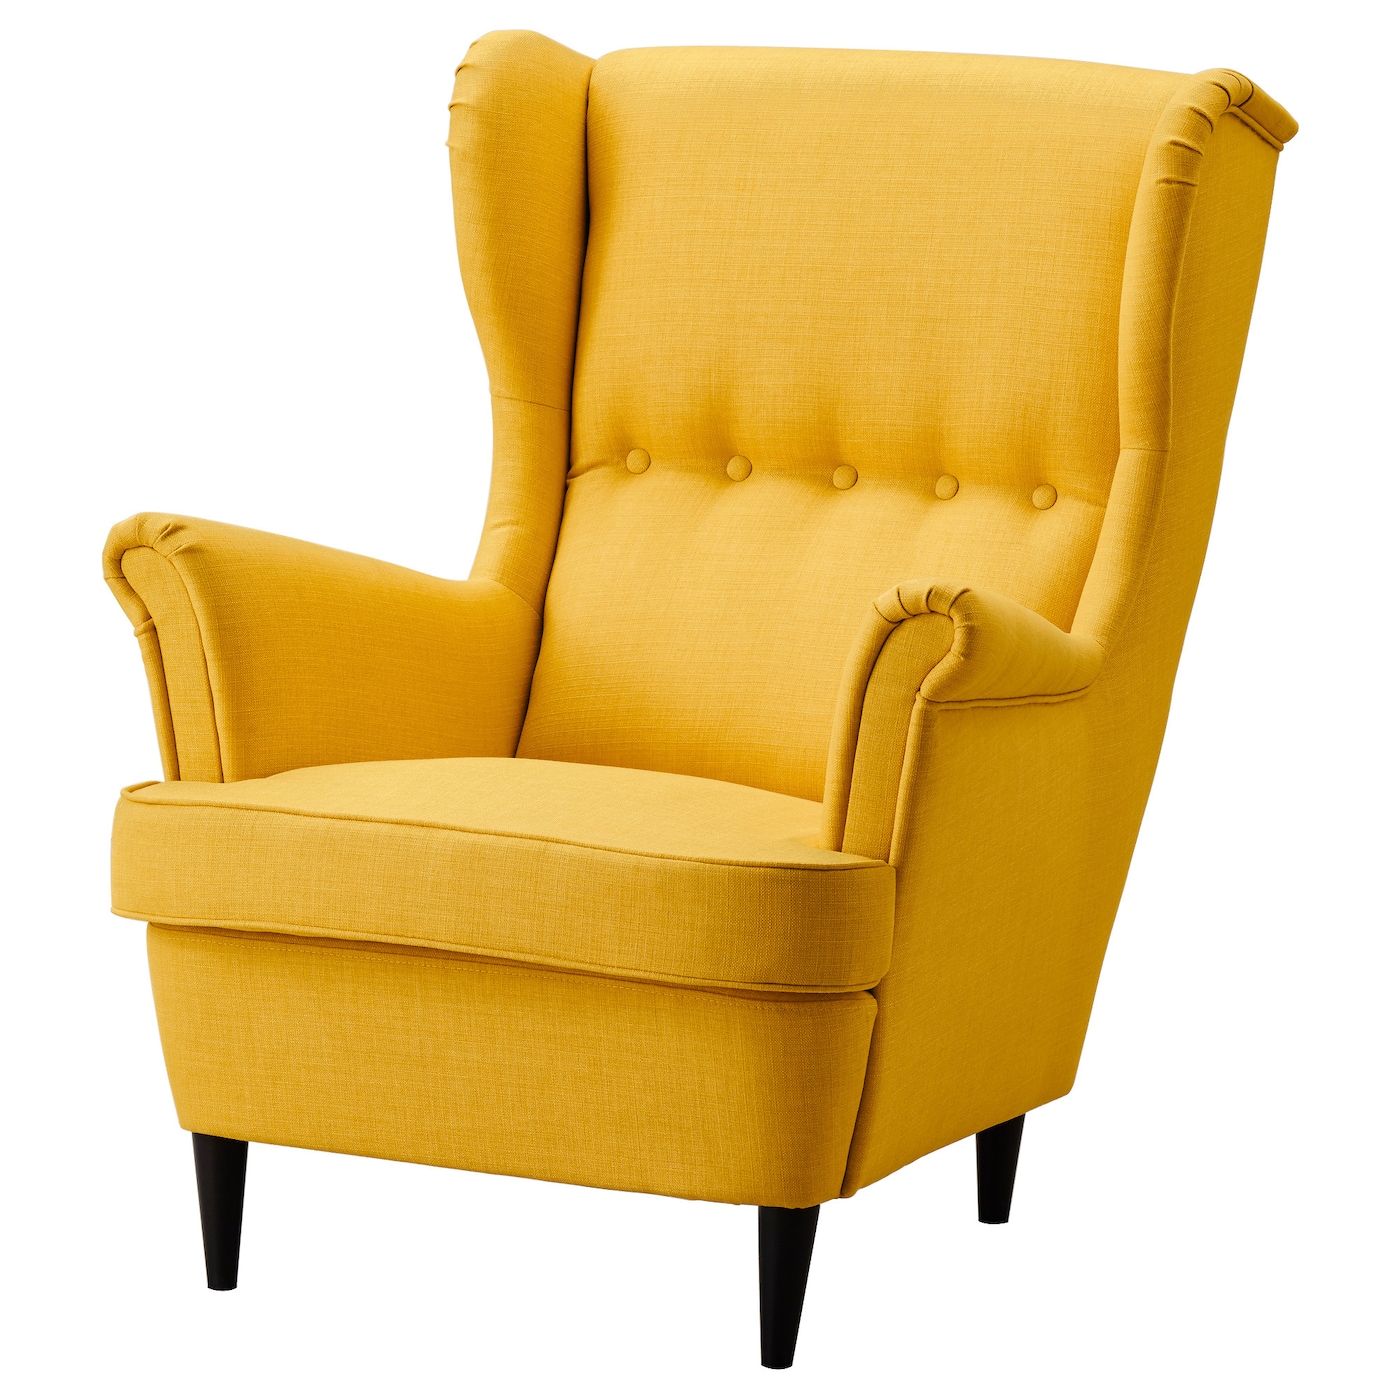 Кресло с подголовником - IKEA STRANDMON, 82х96х101 см, желтый, СТРАНДМОН ИКЕА